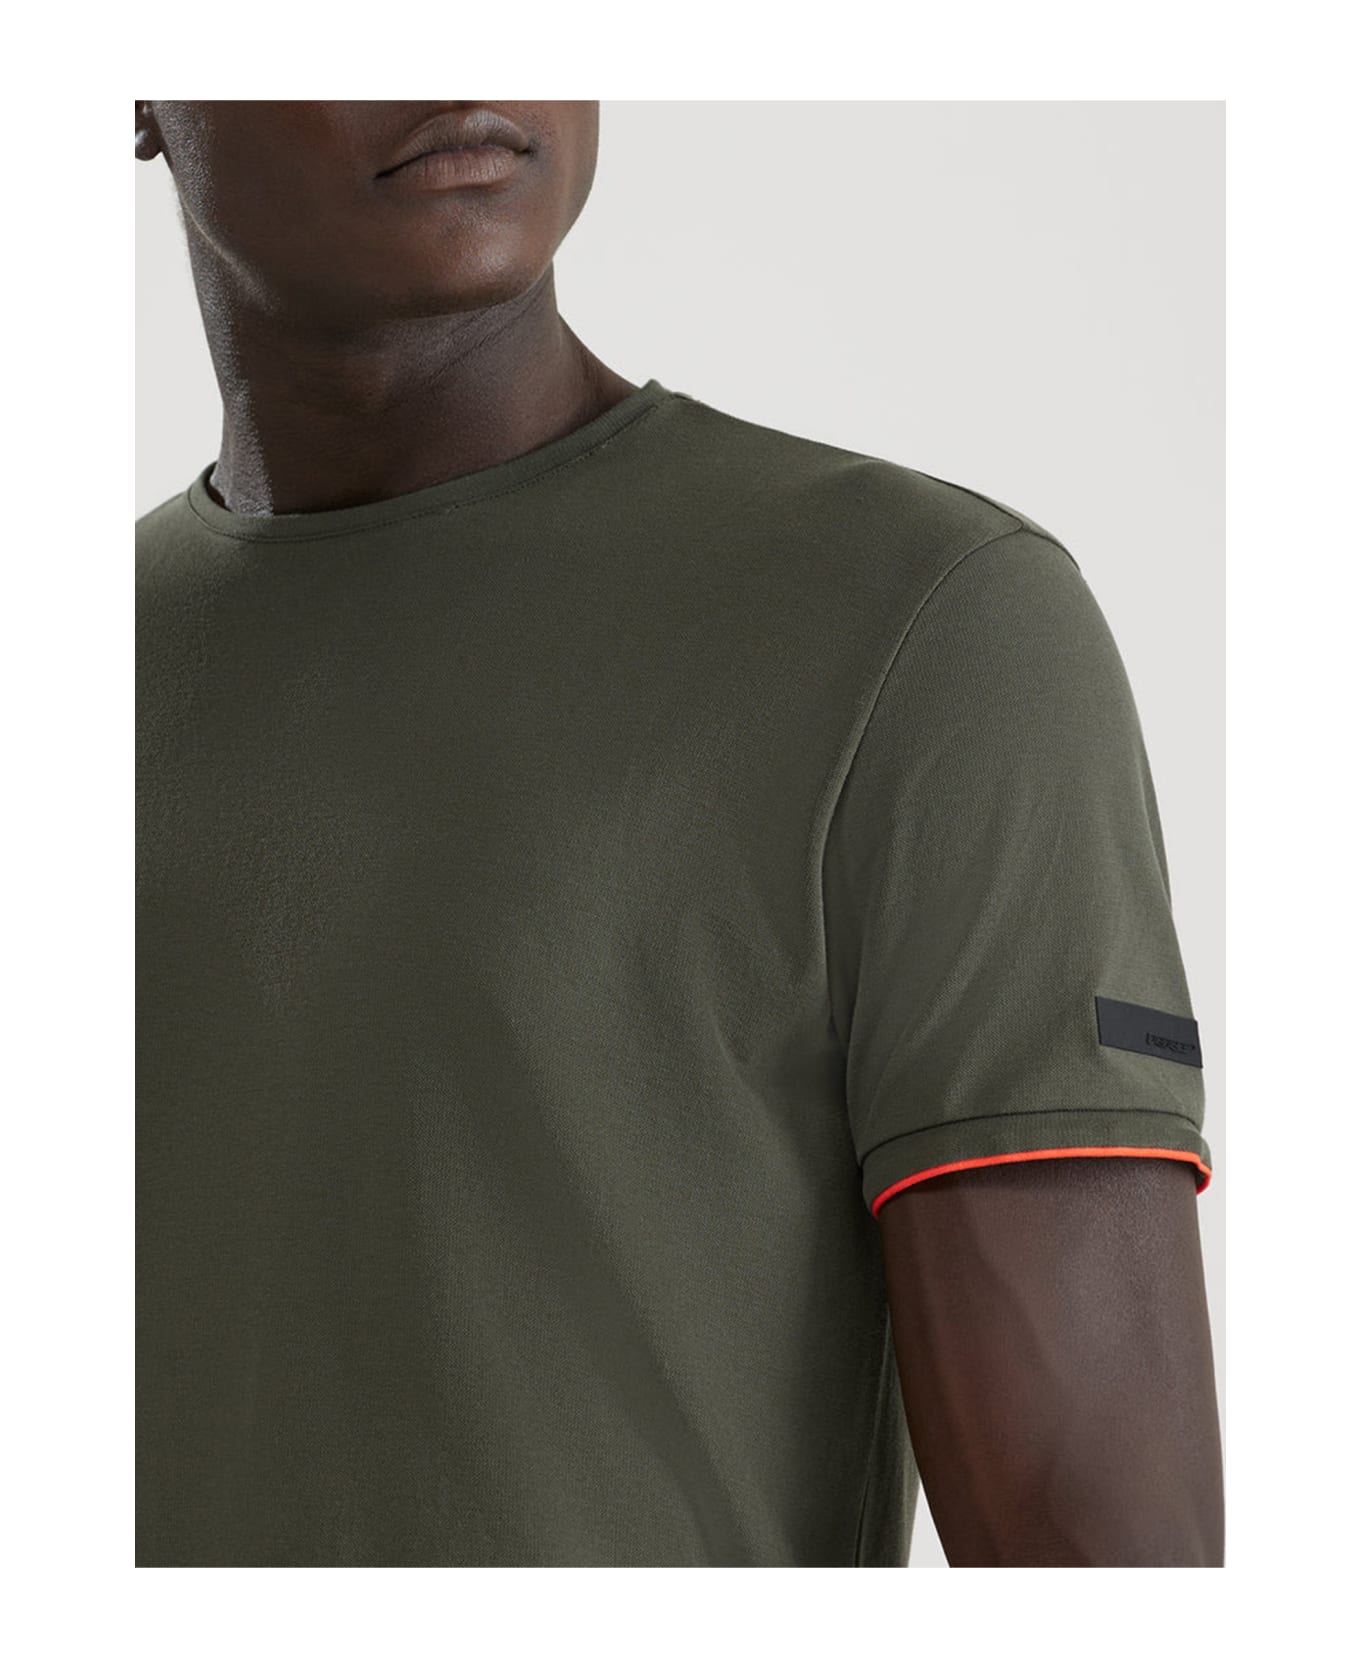 RRD - Roberto Ricci Design T-shirt Macro - Verde Militare